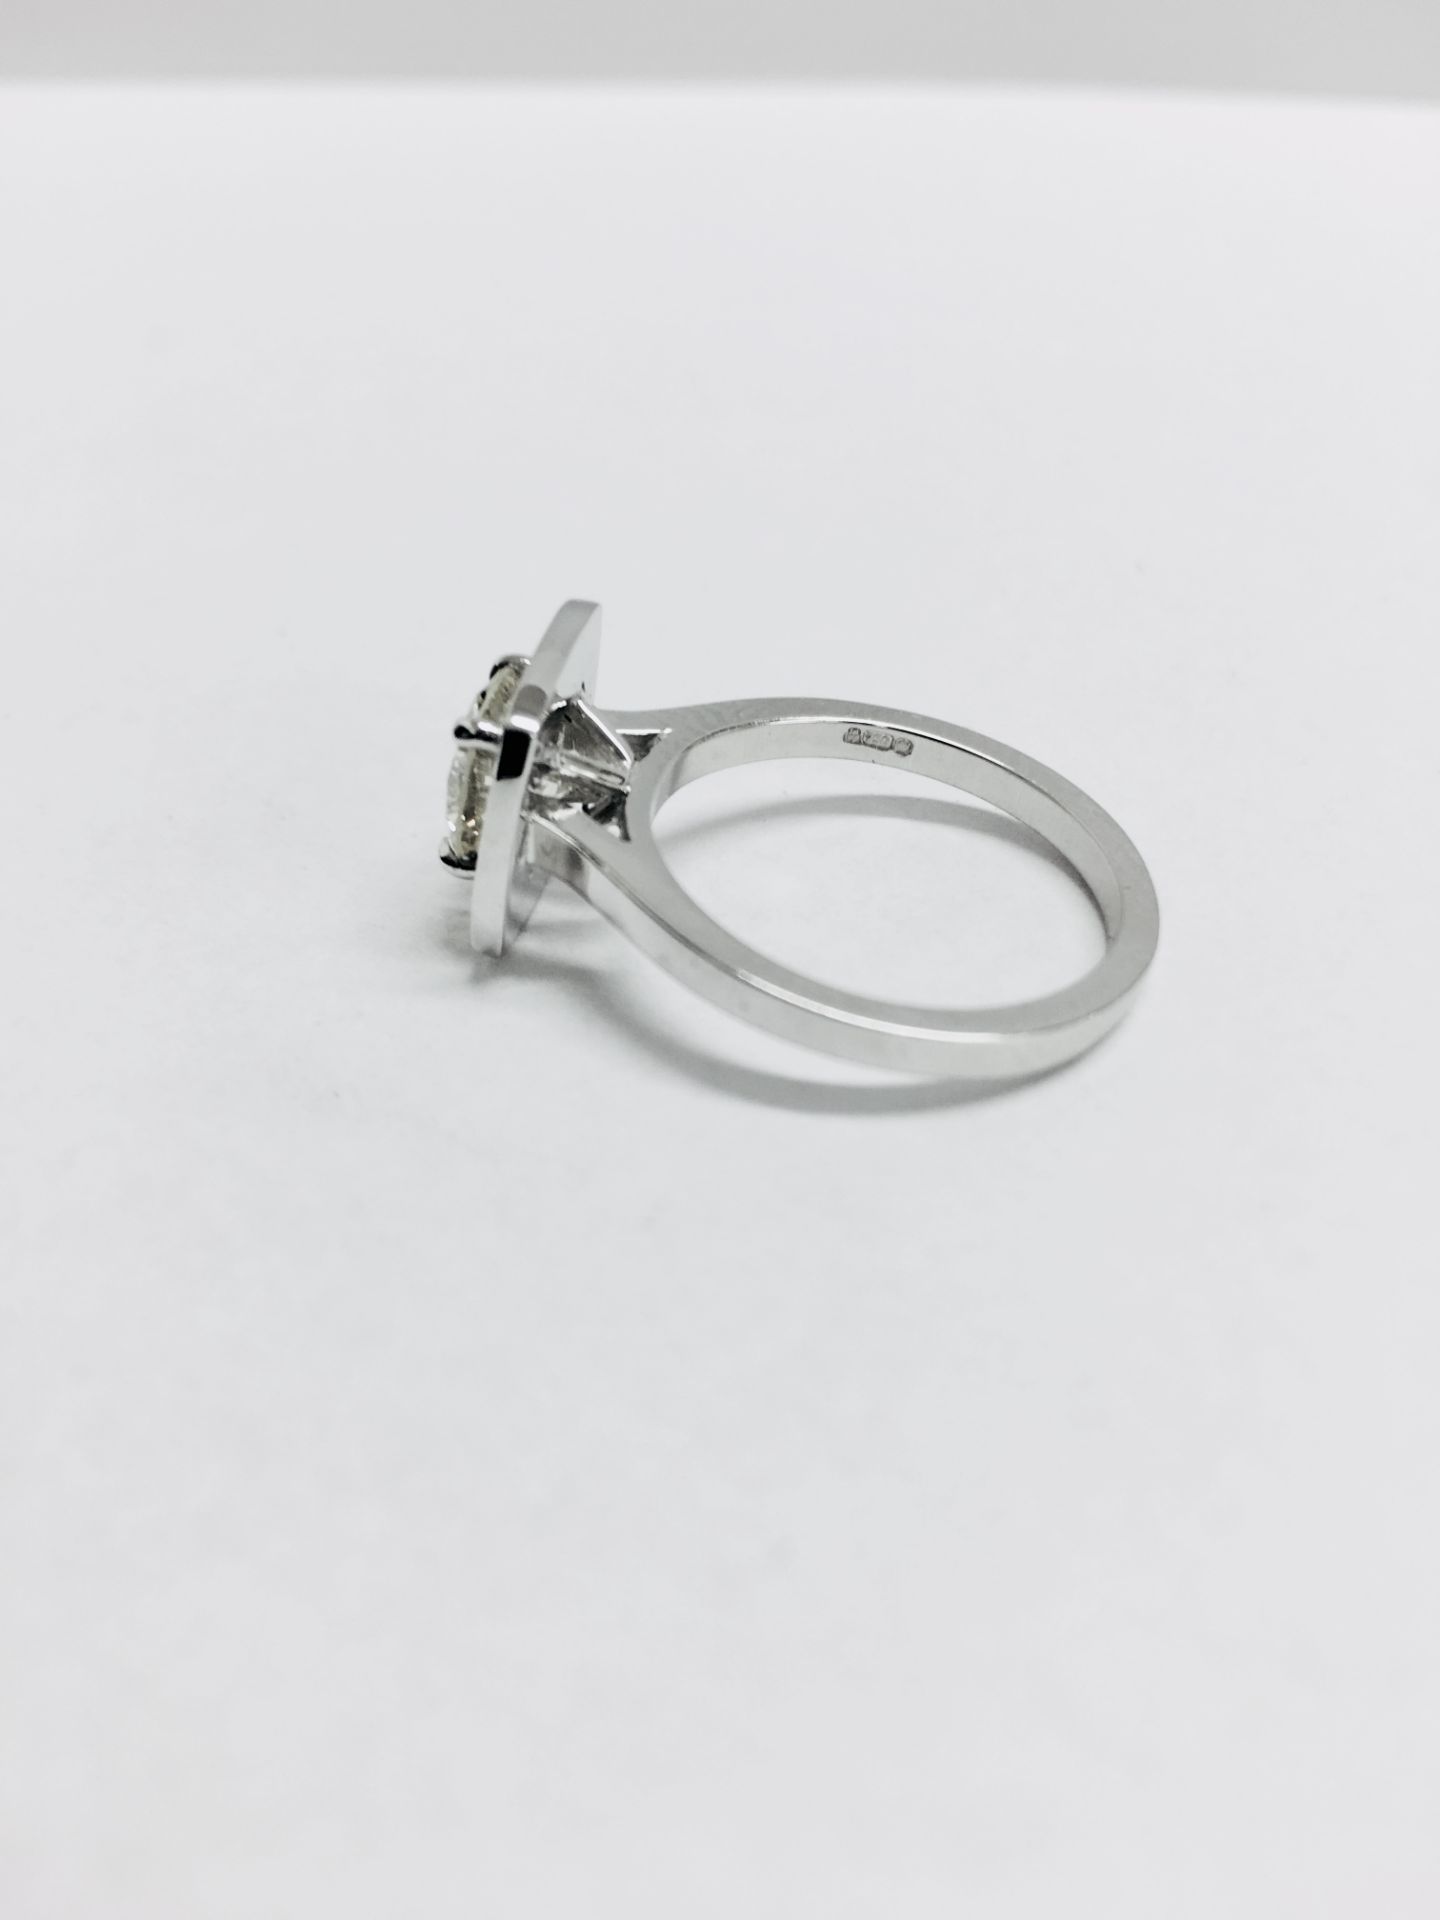 18ct white gold Handmade Halo style ring,0.50ct vvs1 grade g colour diamond,18ct white gold settig - Image 4 of 6